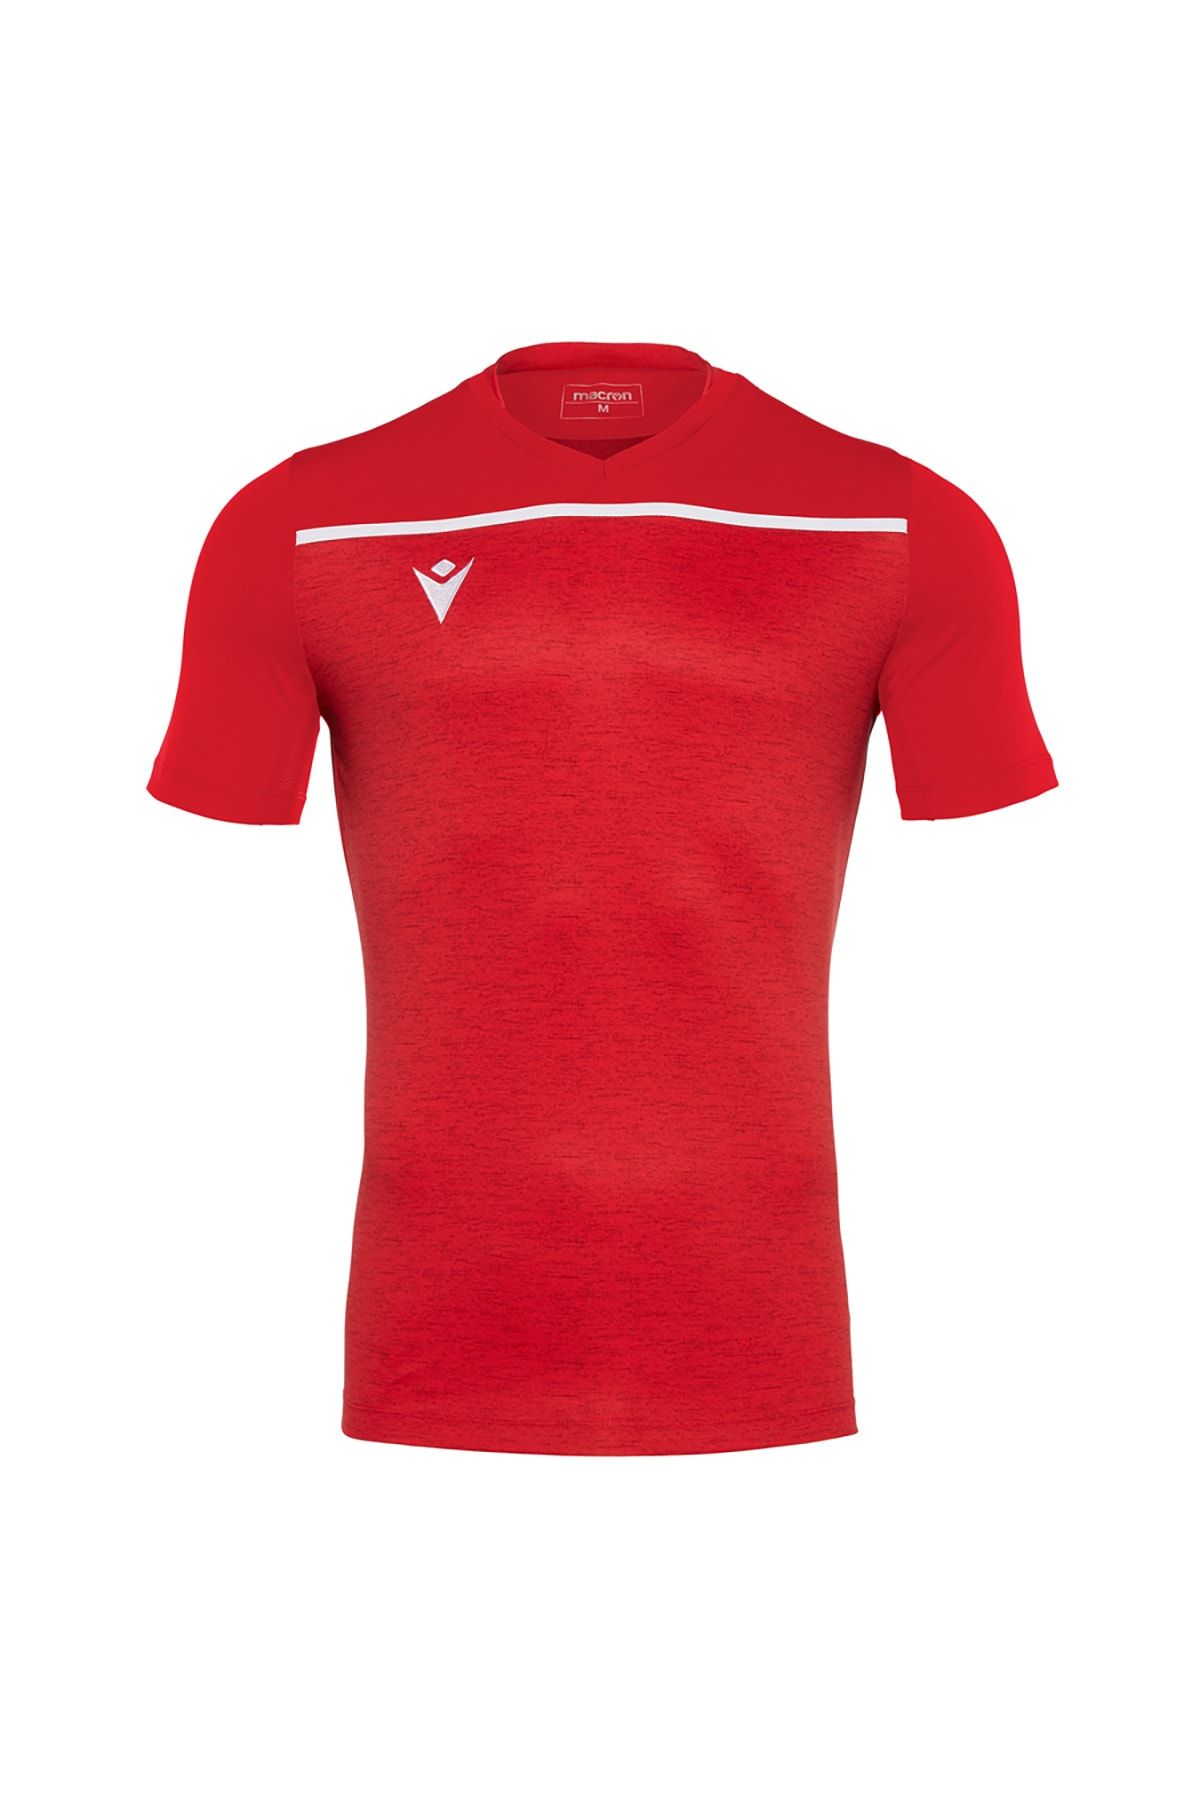 MACRON Kırmızı T-shirt 50630201